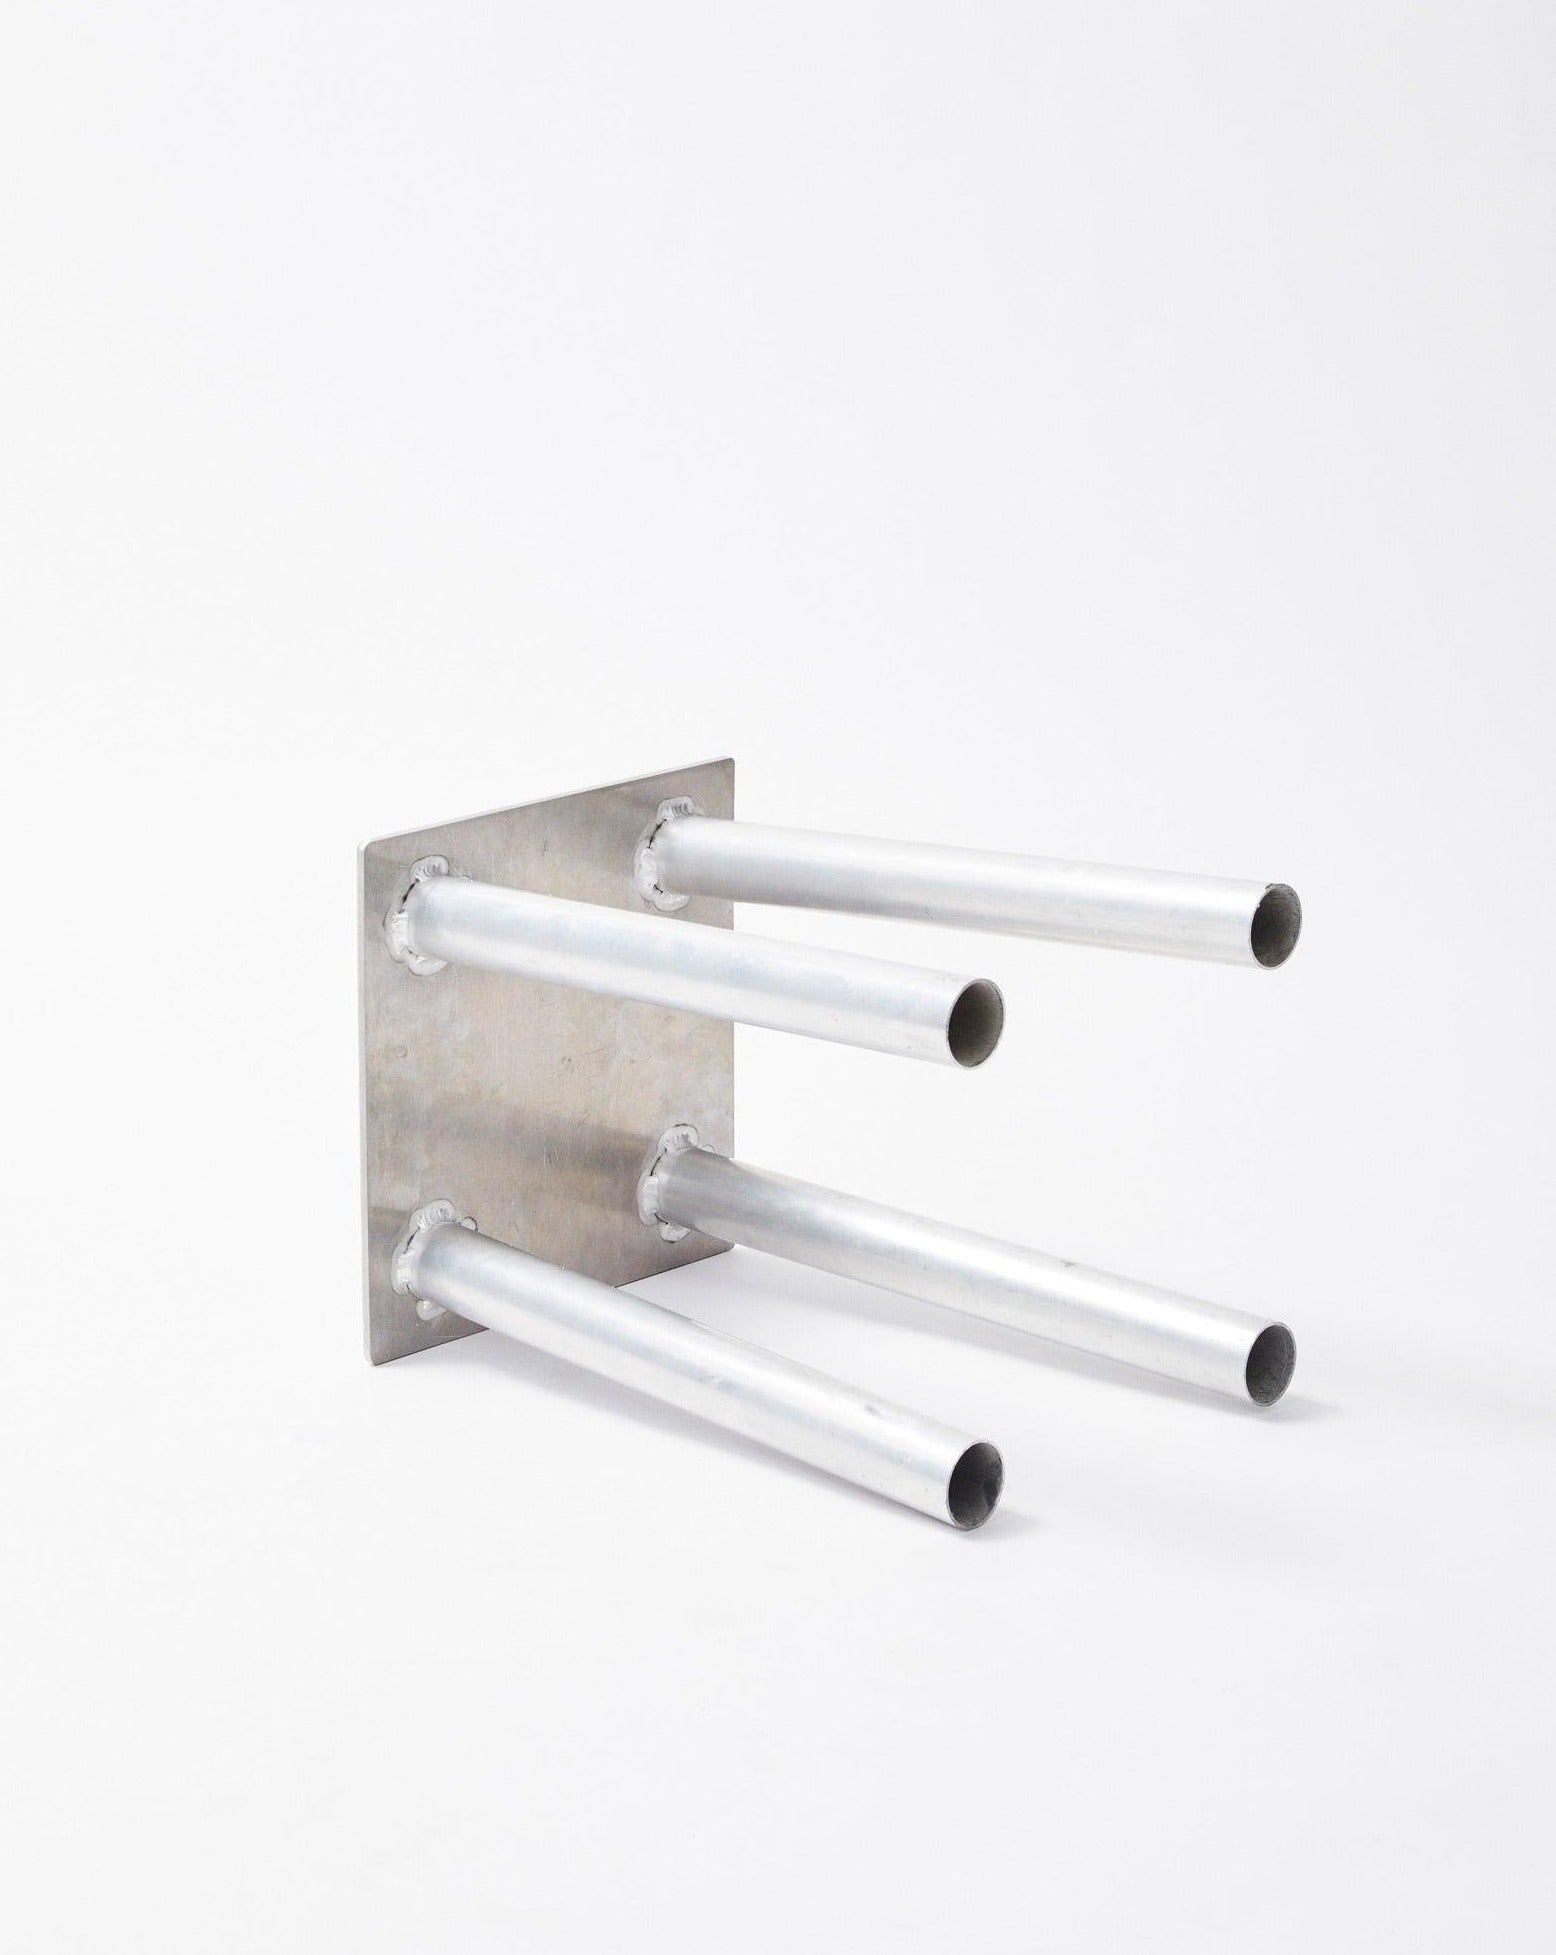 Aluminum decorative stool P-L series lying diagonally to the right